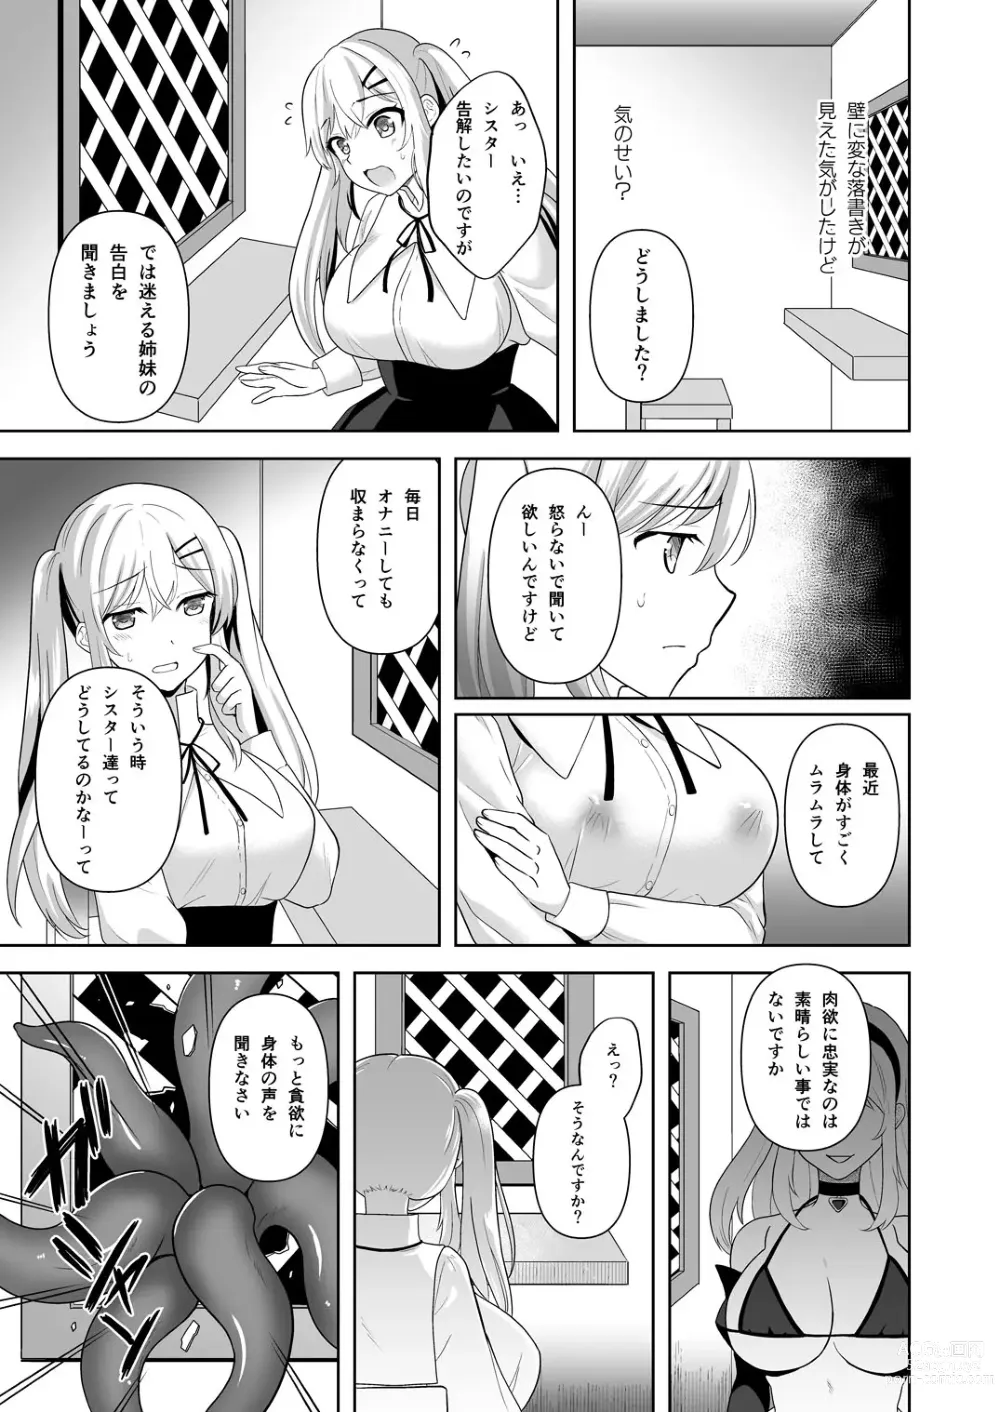 Page 7 of doujinshi Collapse Kuzure Yuku Risei